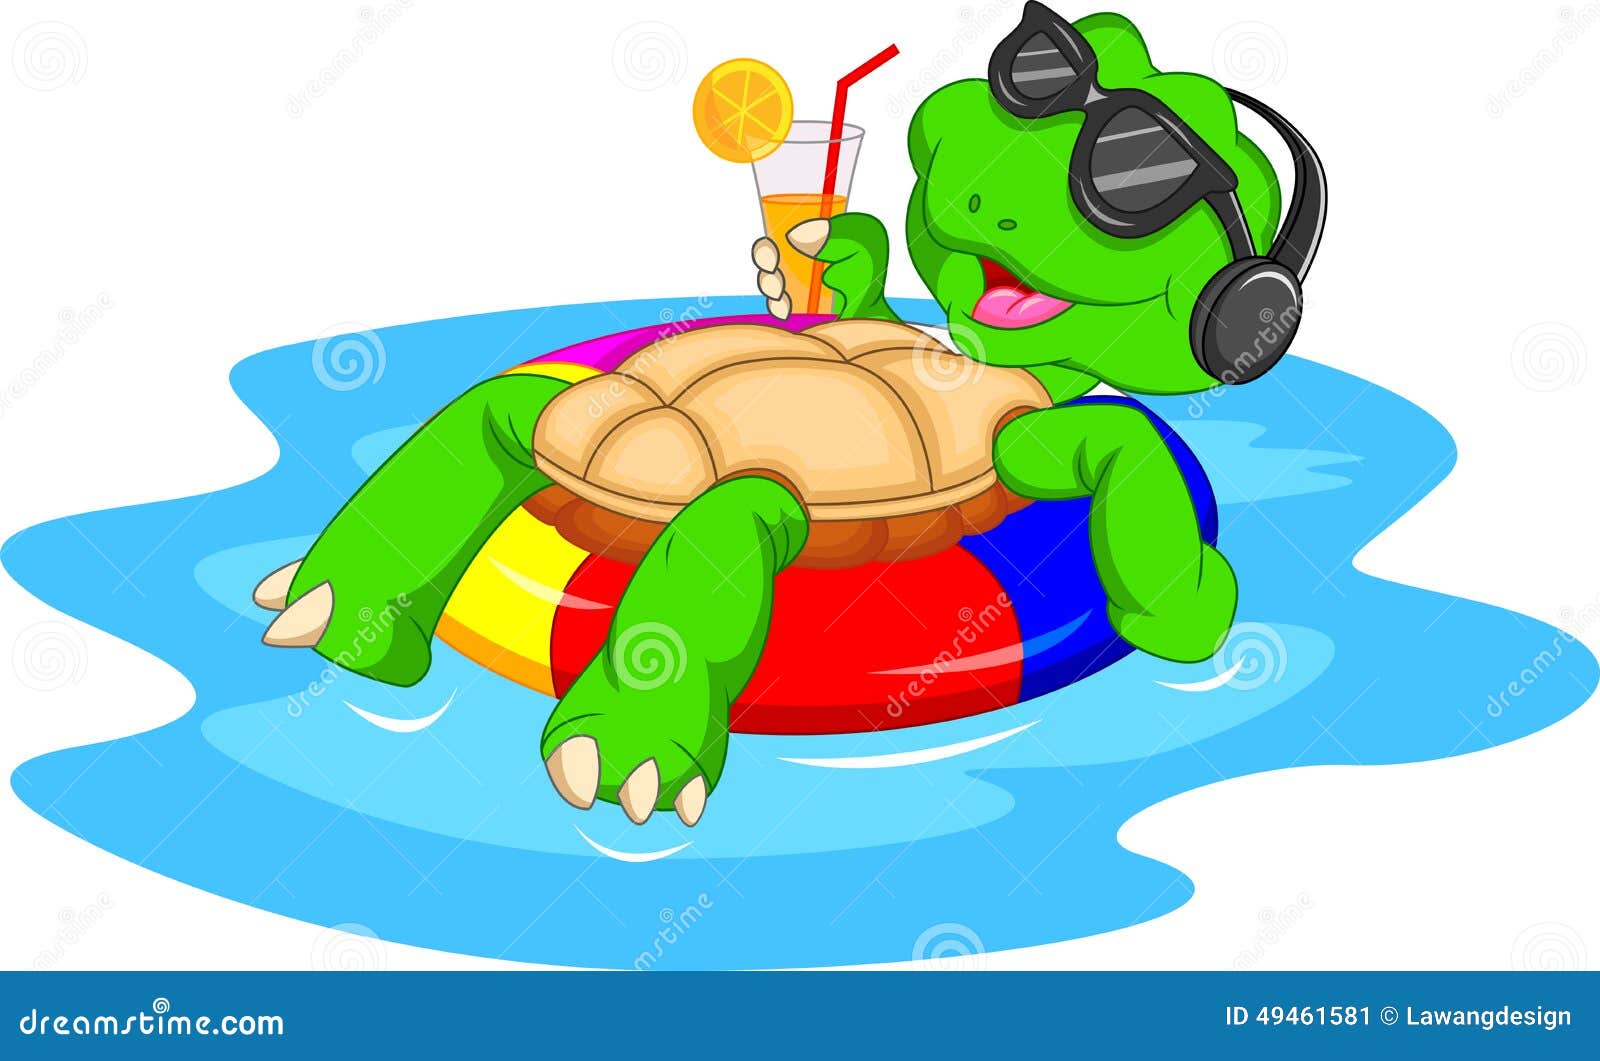 Cute green turtle cartoon stock vector. Illustration of float - 49461581